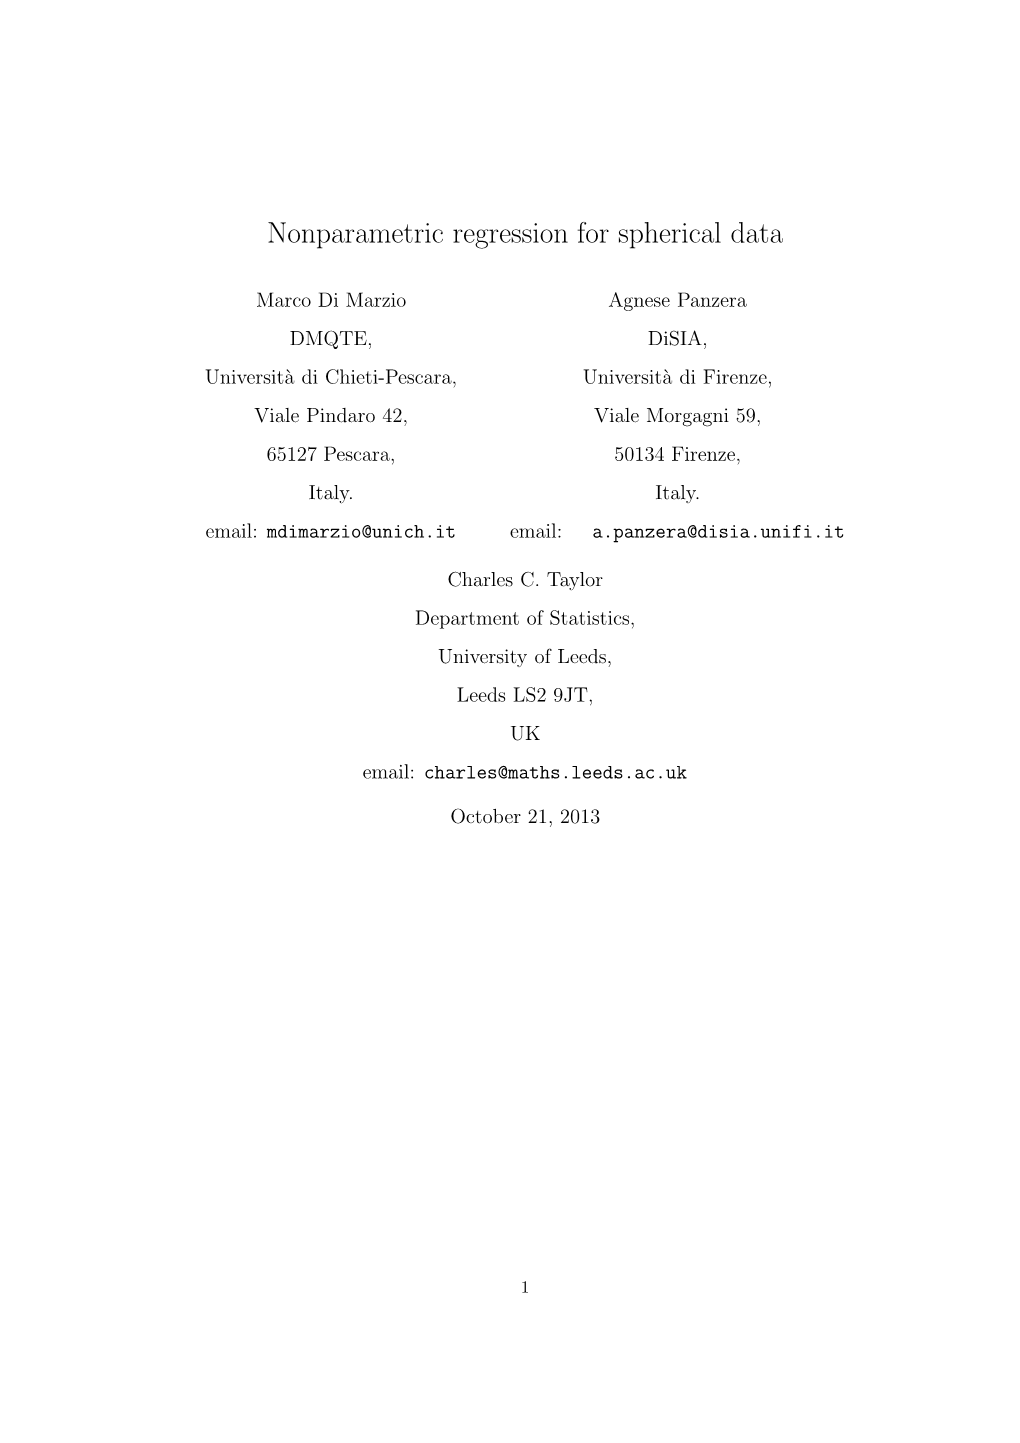 Nonparametric Regression for Spherical Data